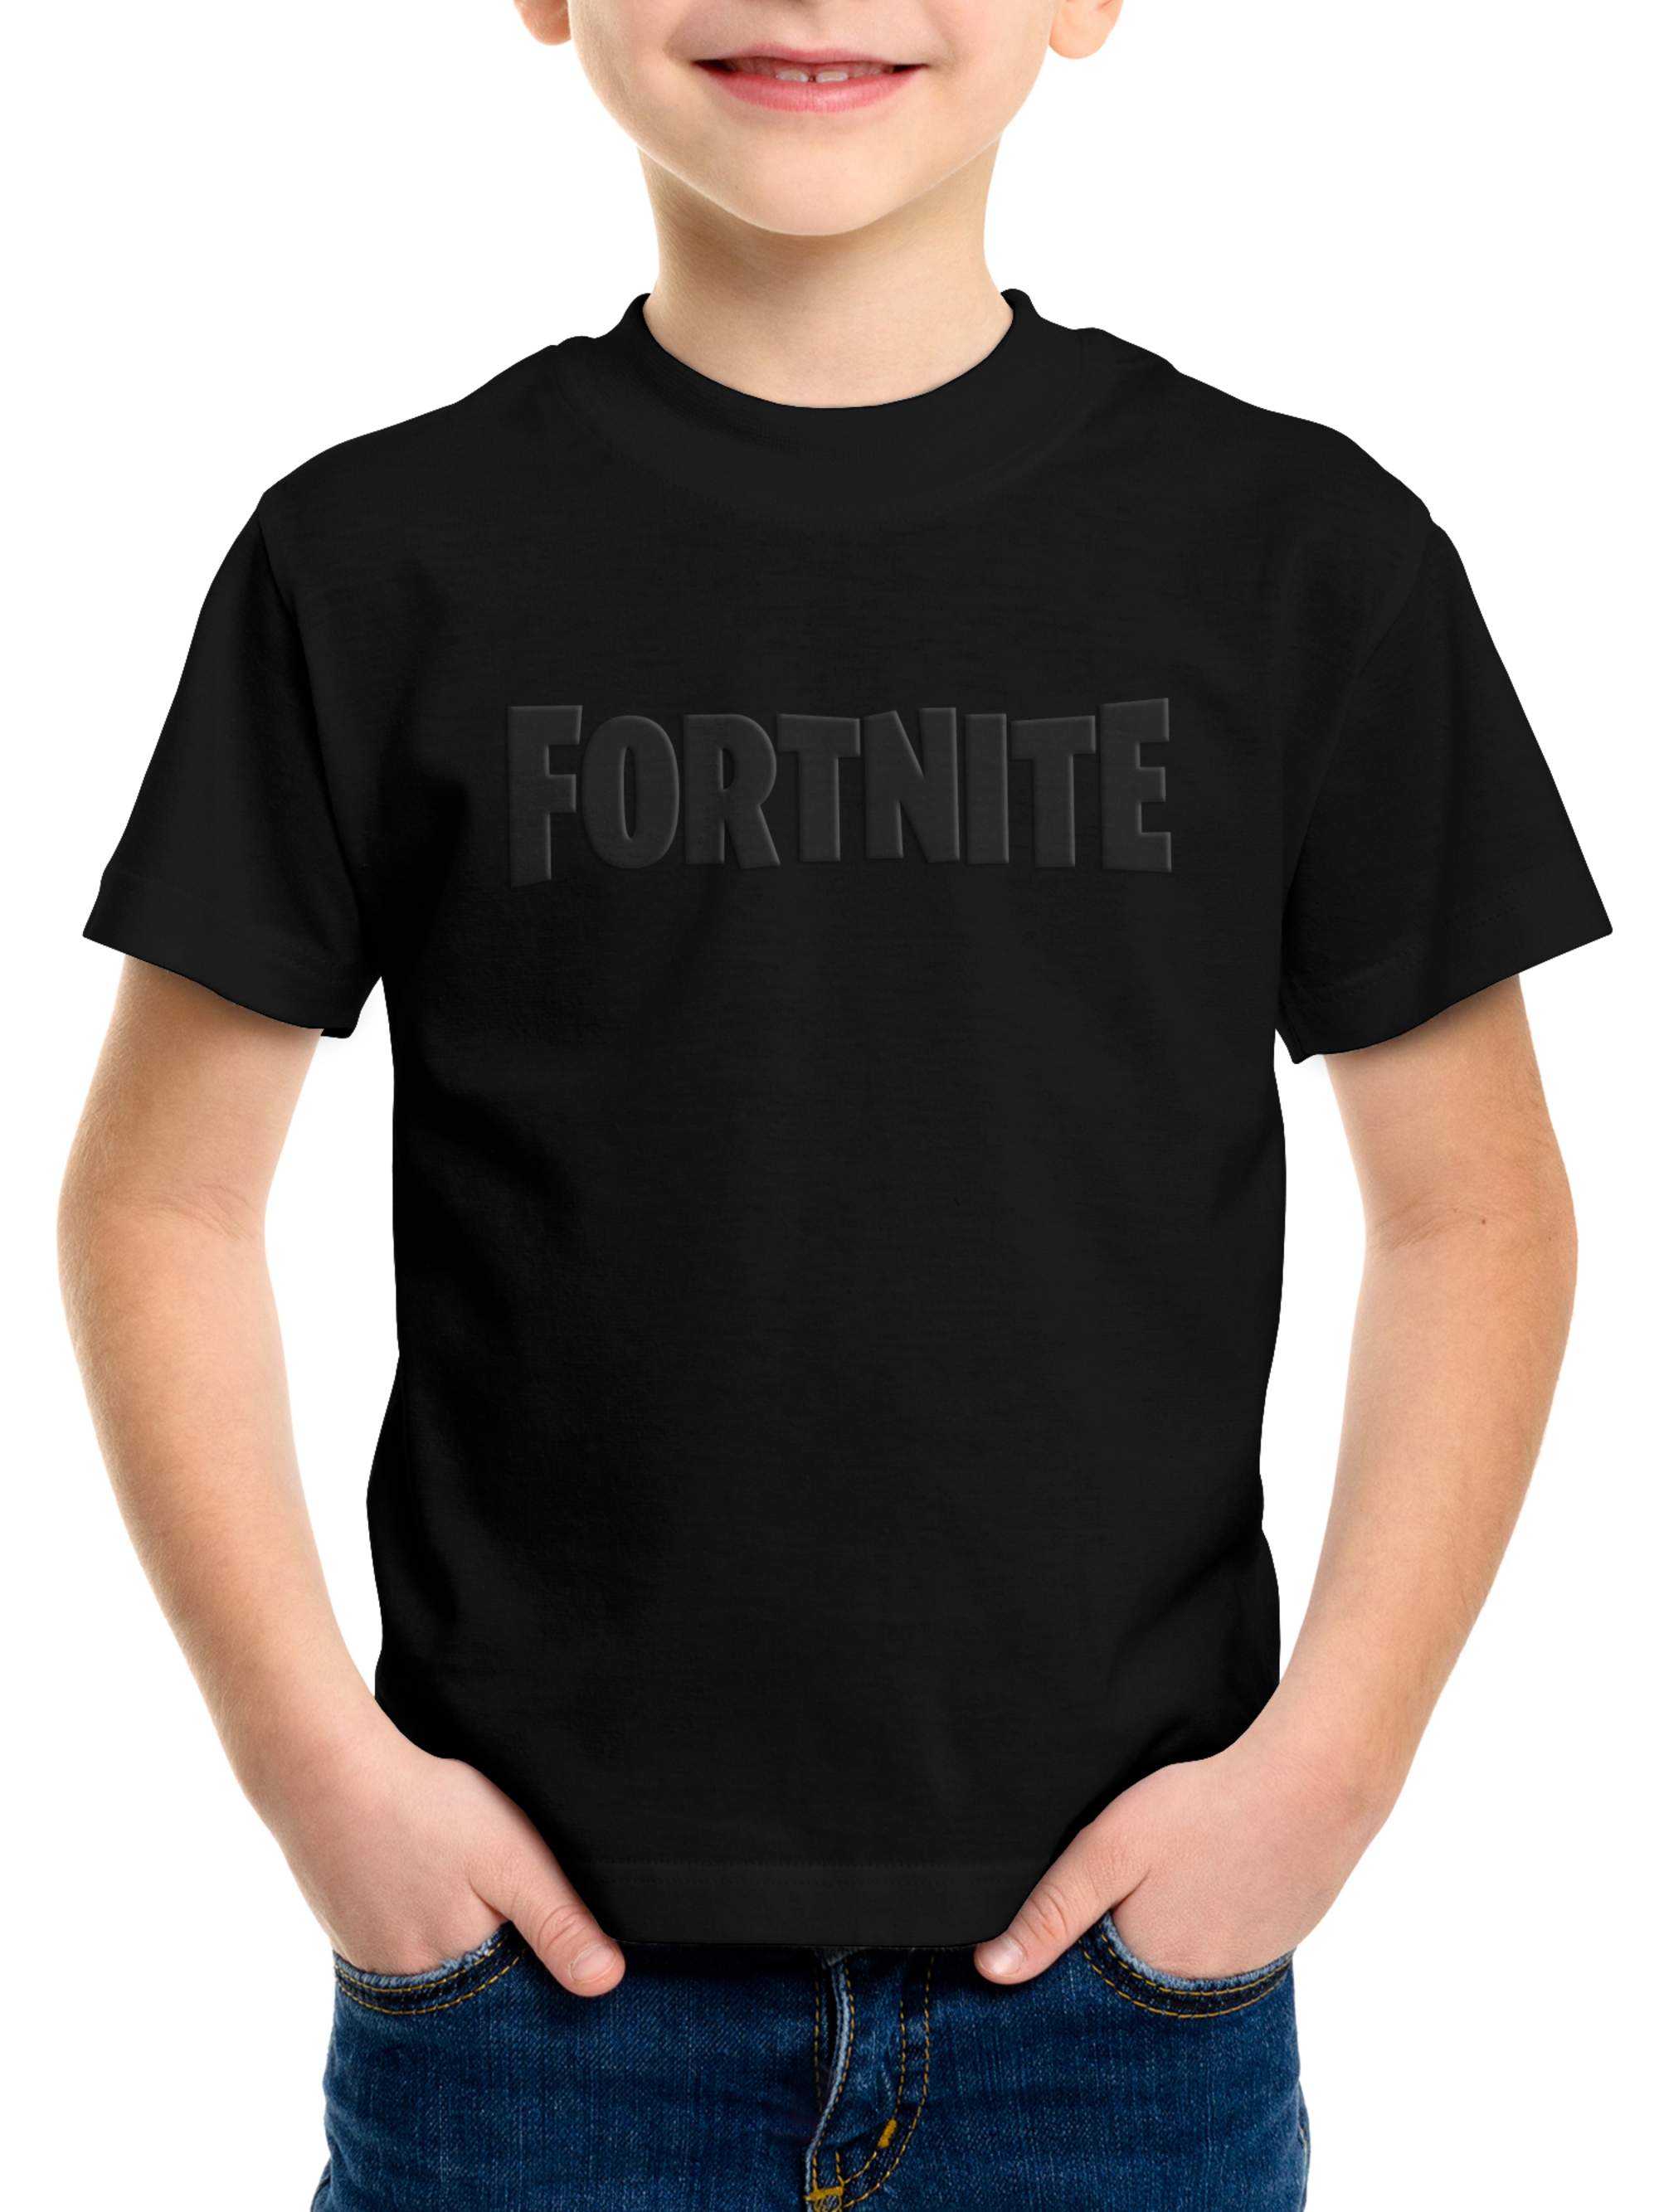 Fortnite Boys Logo Graphic T-Shirt, Sizes 8-18 - image 4 of 5